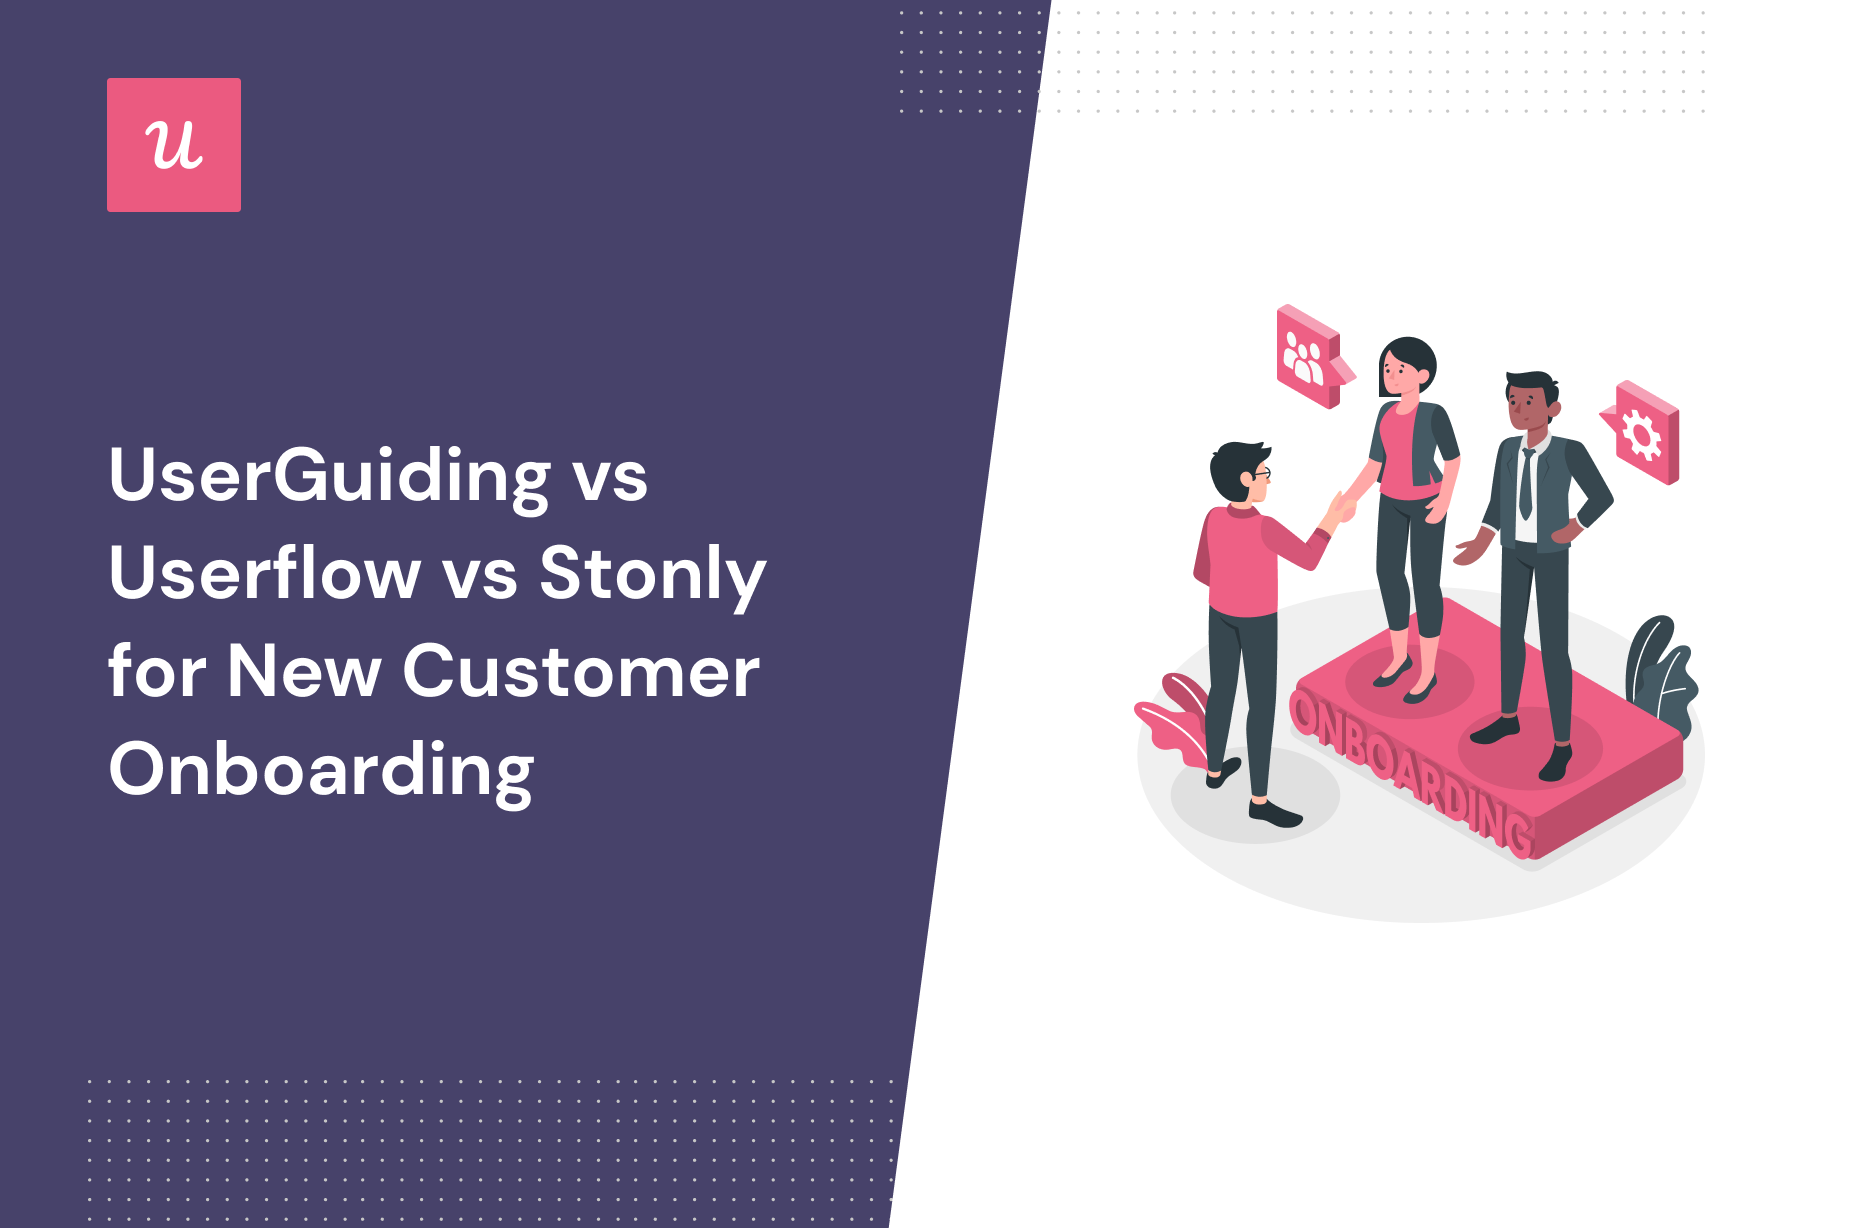 UserGuiding vs Userflow vs Stonly for New Customer Onboarding